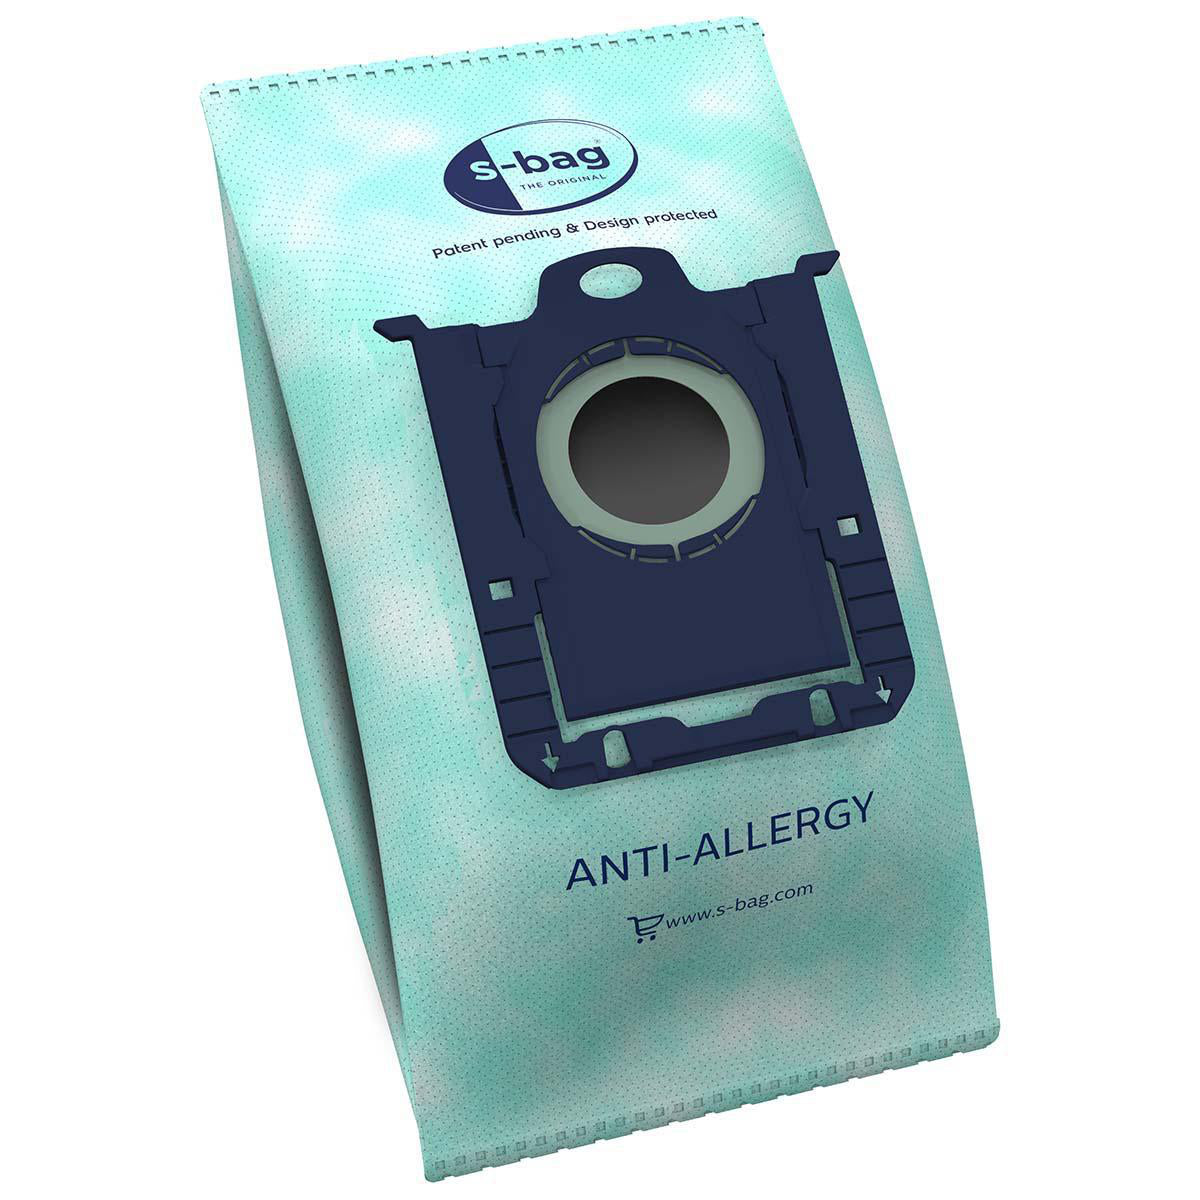 E206S s-bag® Staubsaugerbeutel Anti-Allergie - 4 Stück